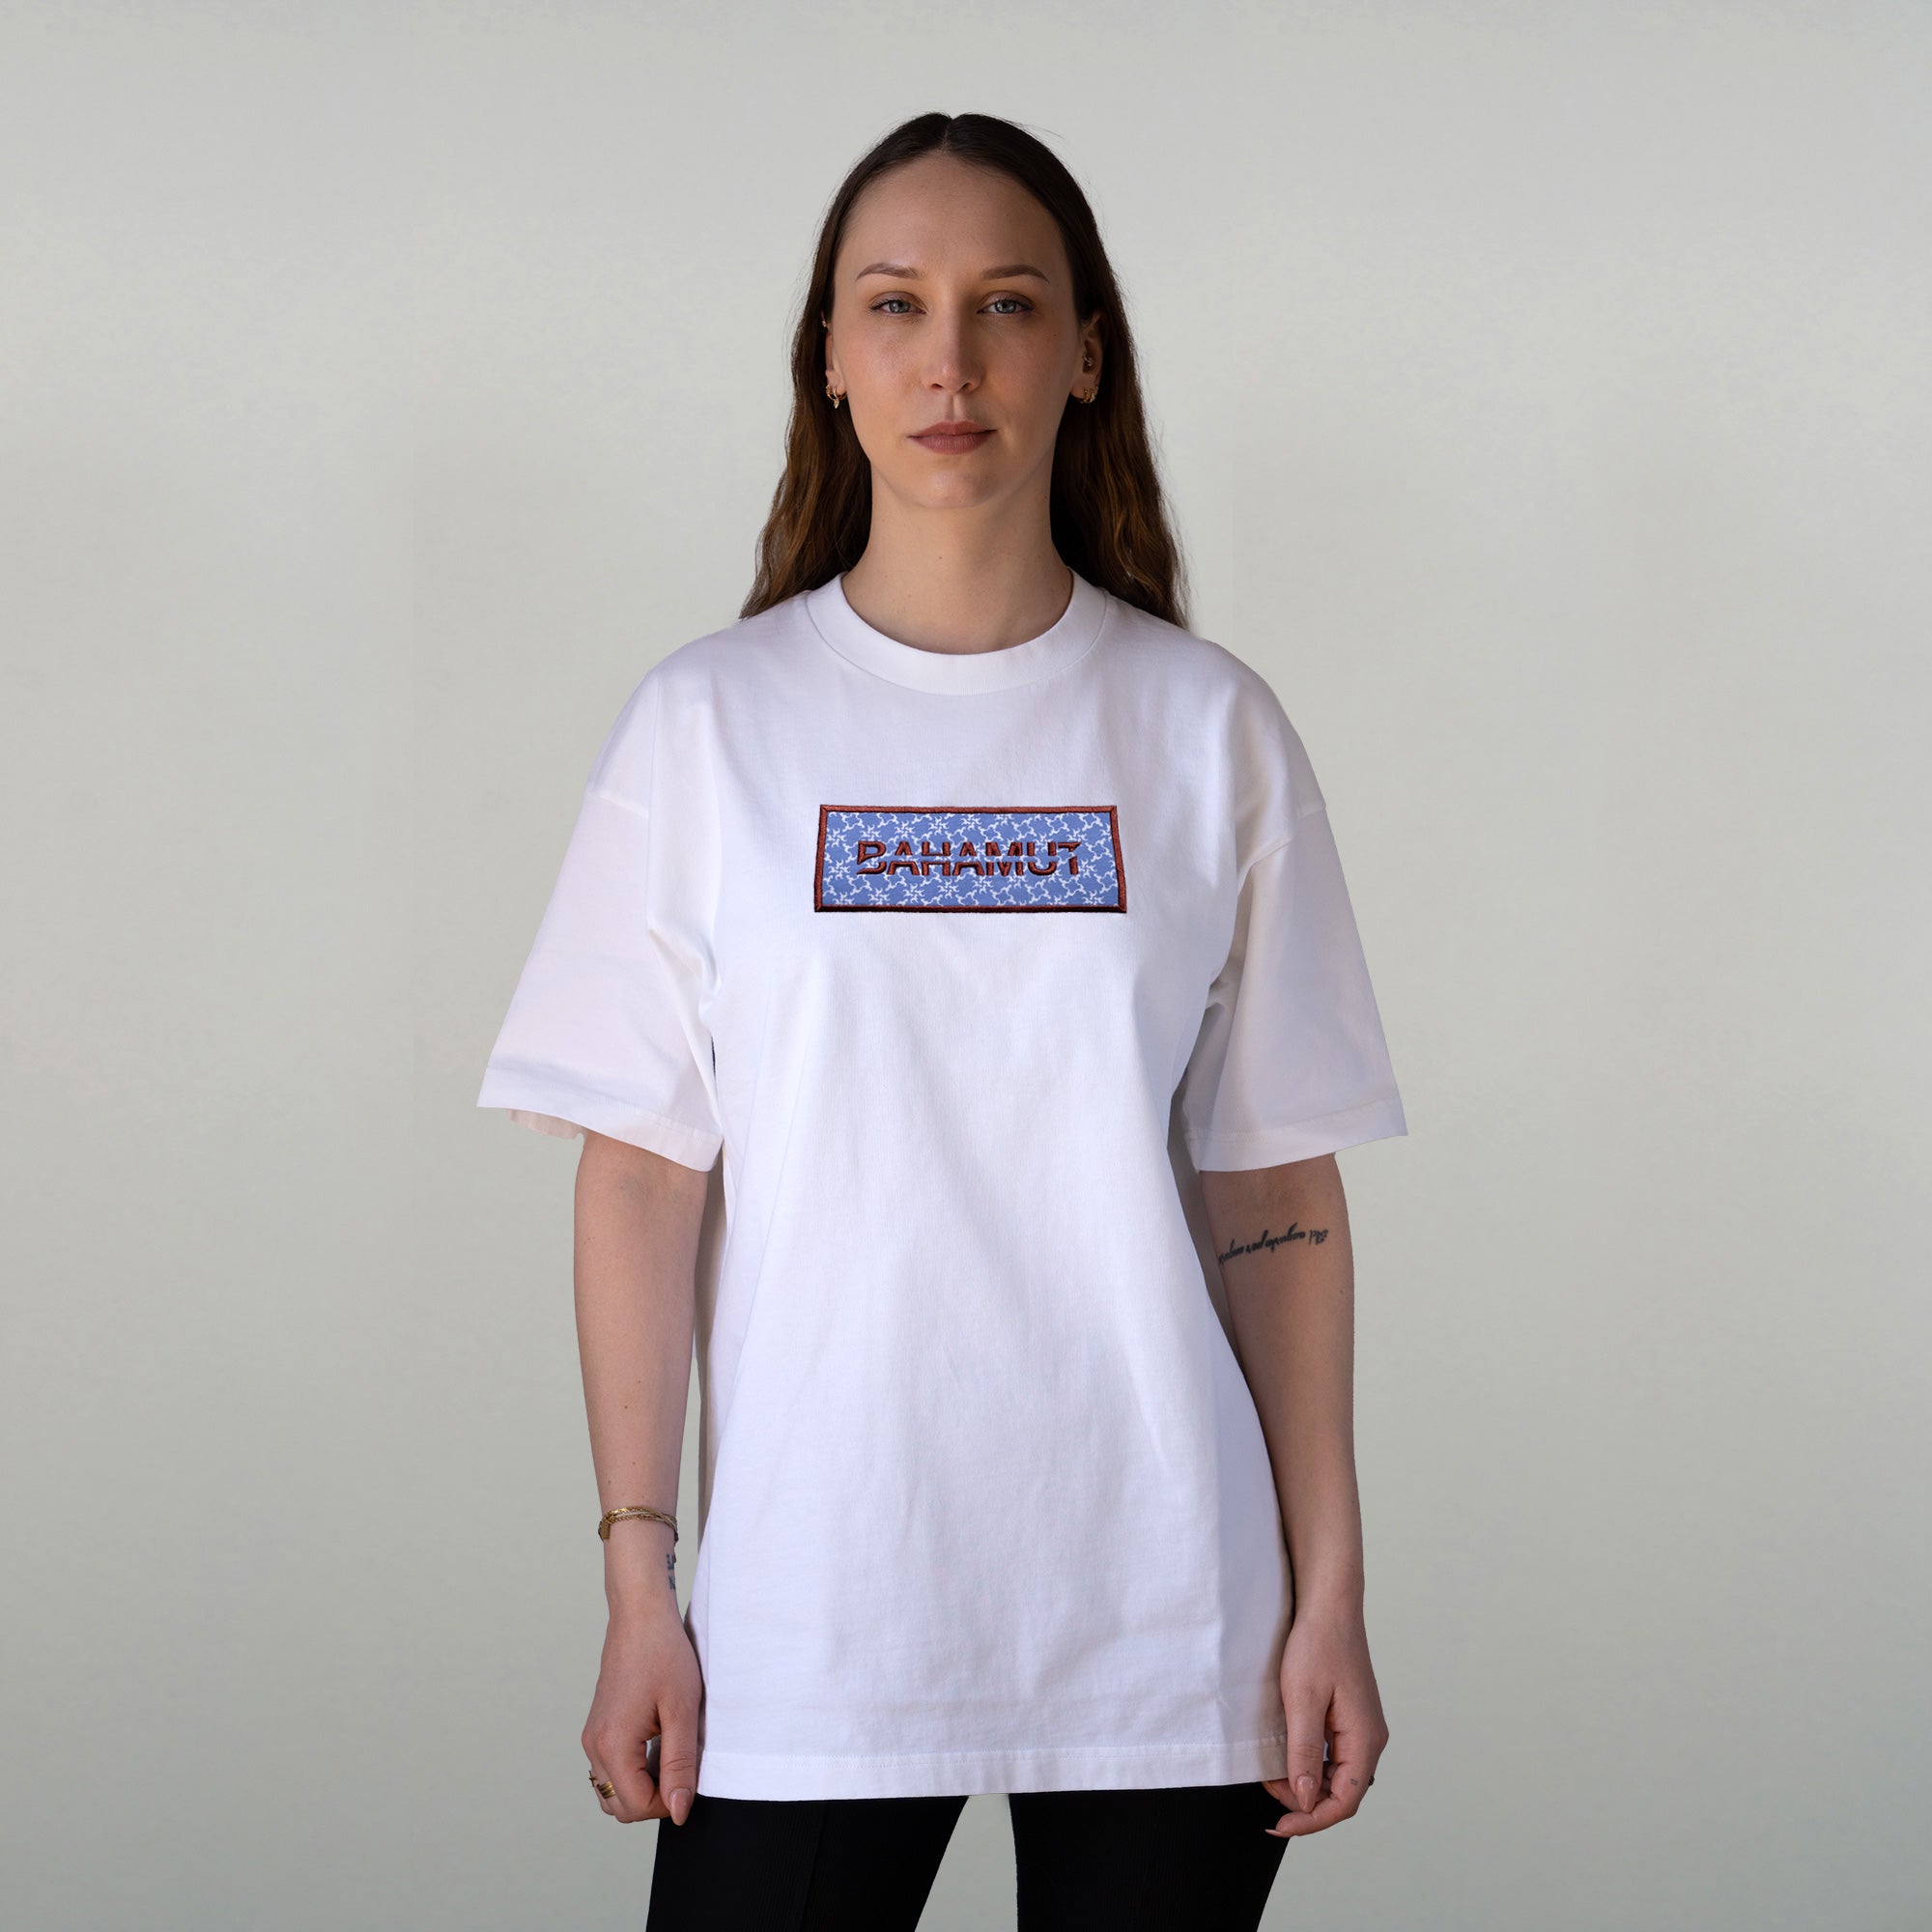 T-shirt "Logostar" - UV REACT porté par un modèle féminin vu de face